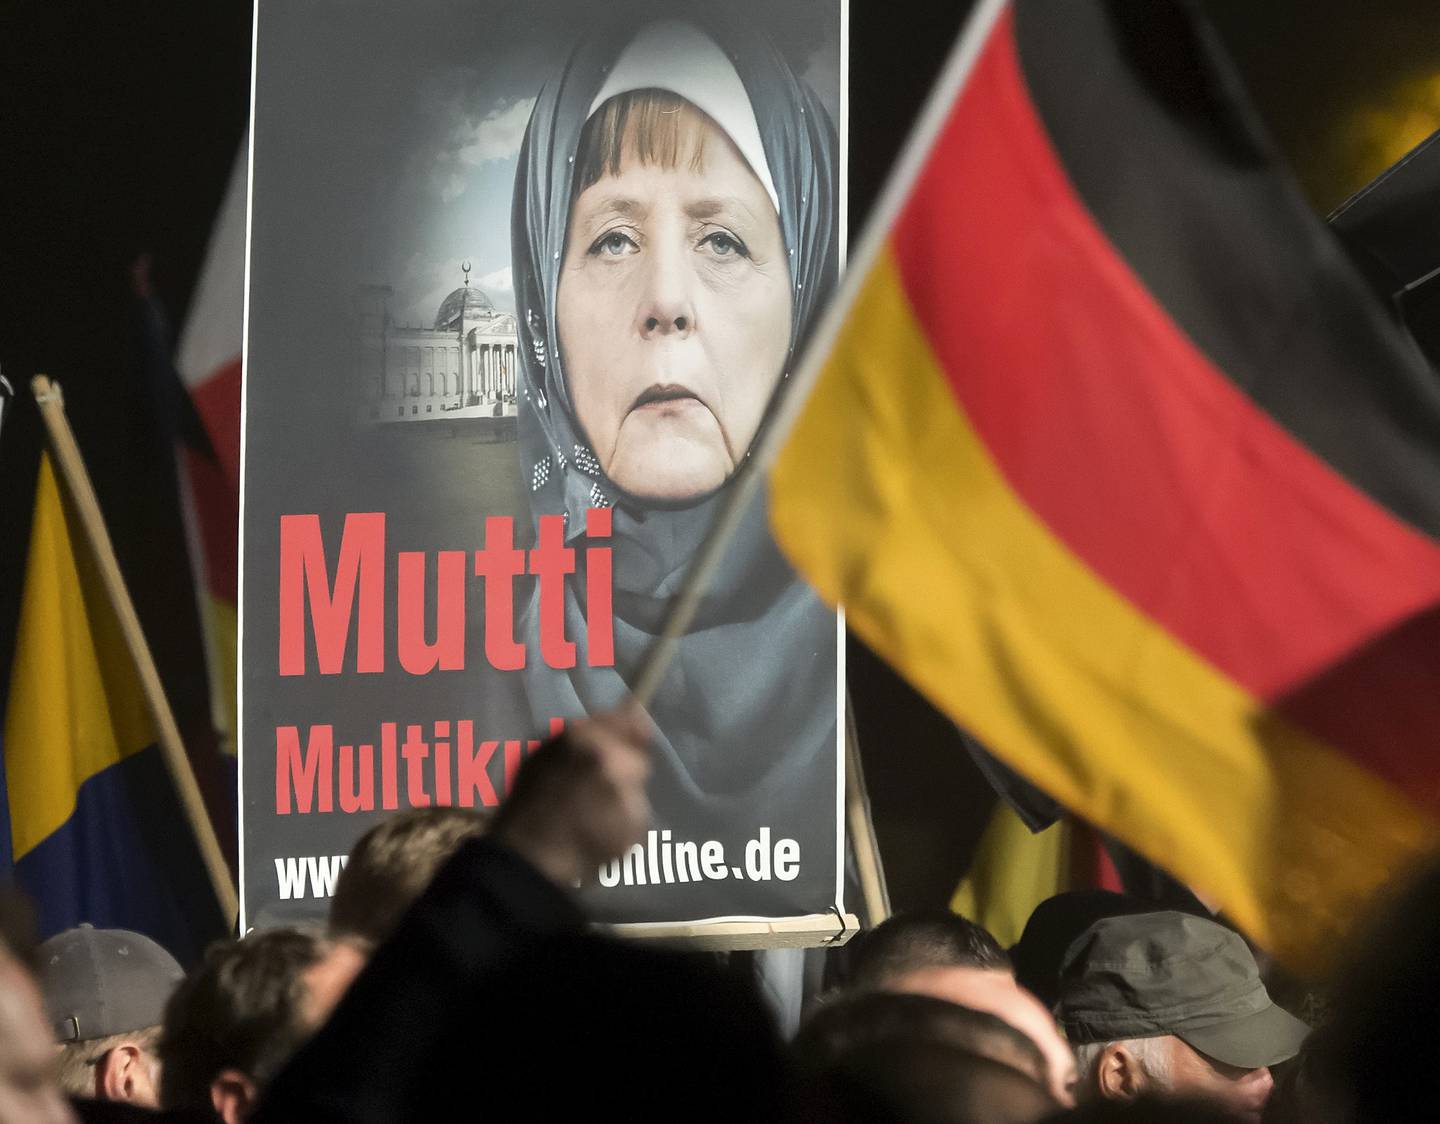 Under flyktningkrisen i 2015 ledet høyrepopulistiske Alternativ for Tyskland protester mot innvandring i Tyskland, der forbundskansler Angela Merkel i hijab ble kalt «mor mulitikulti». Foto: Jens Meyer, AP/NTB scanpix 